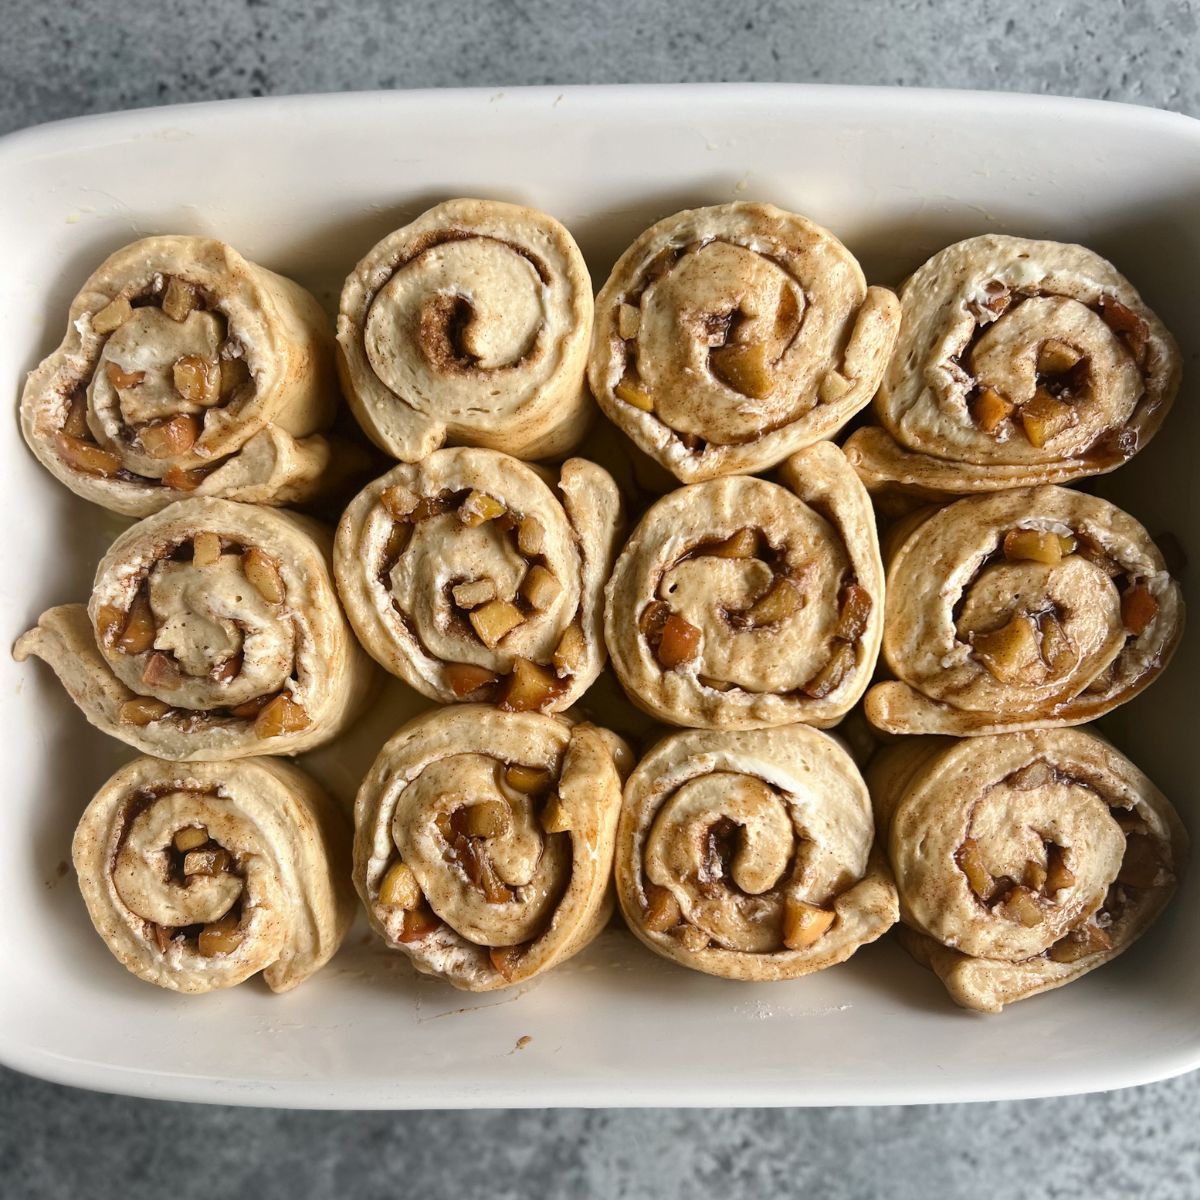 Twelve unbaked cinnamon rolls in a 9x13 baking dish. 